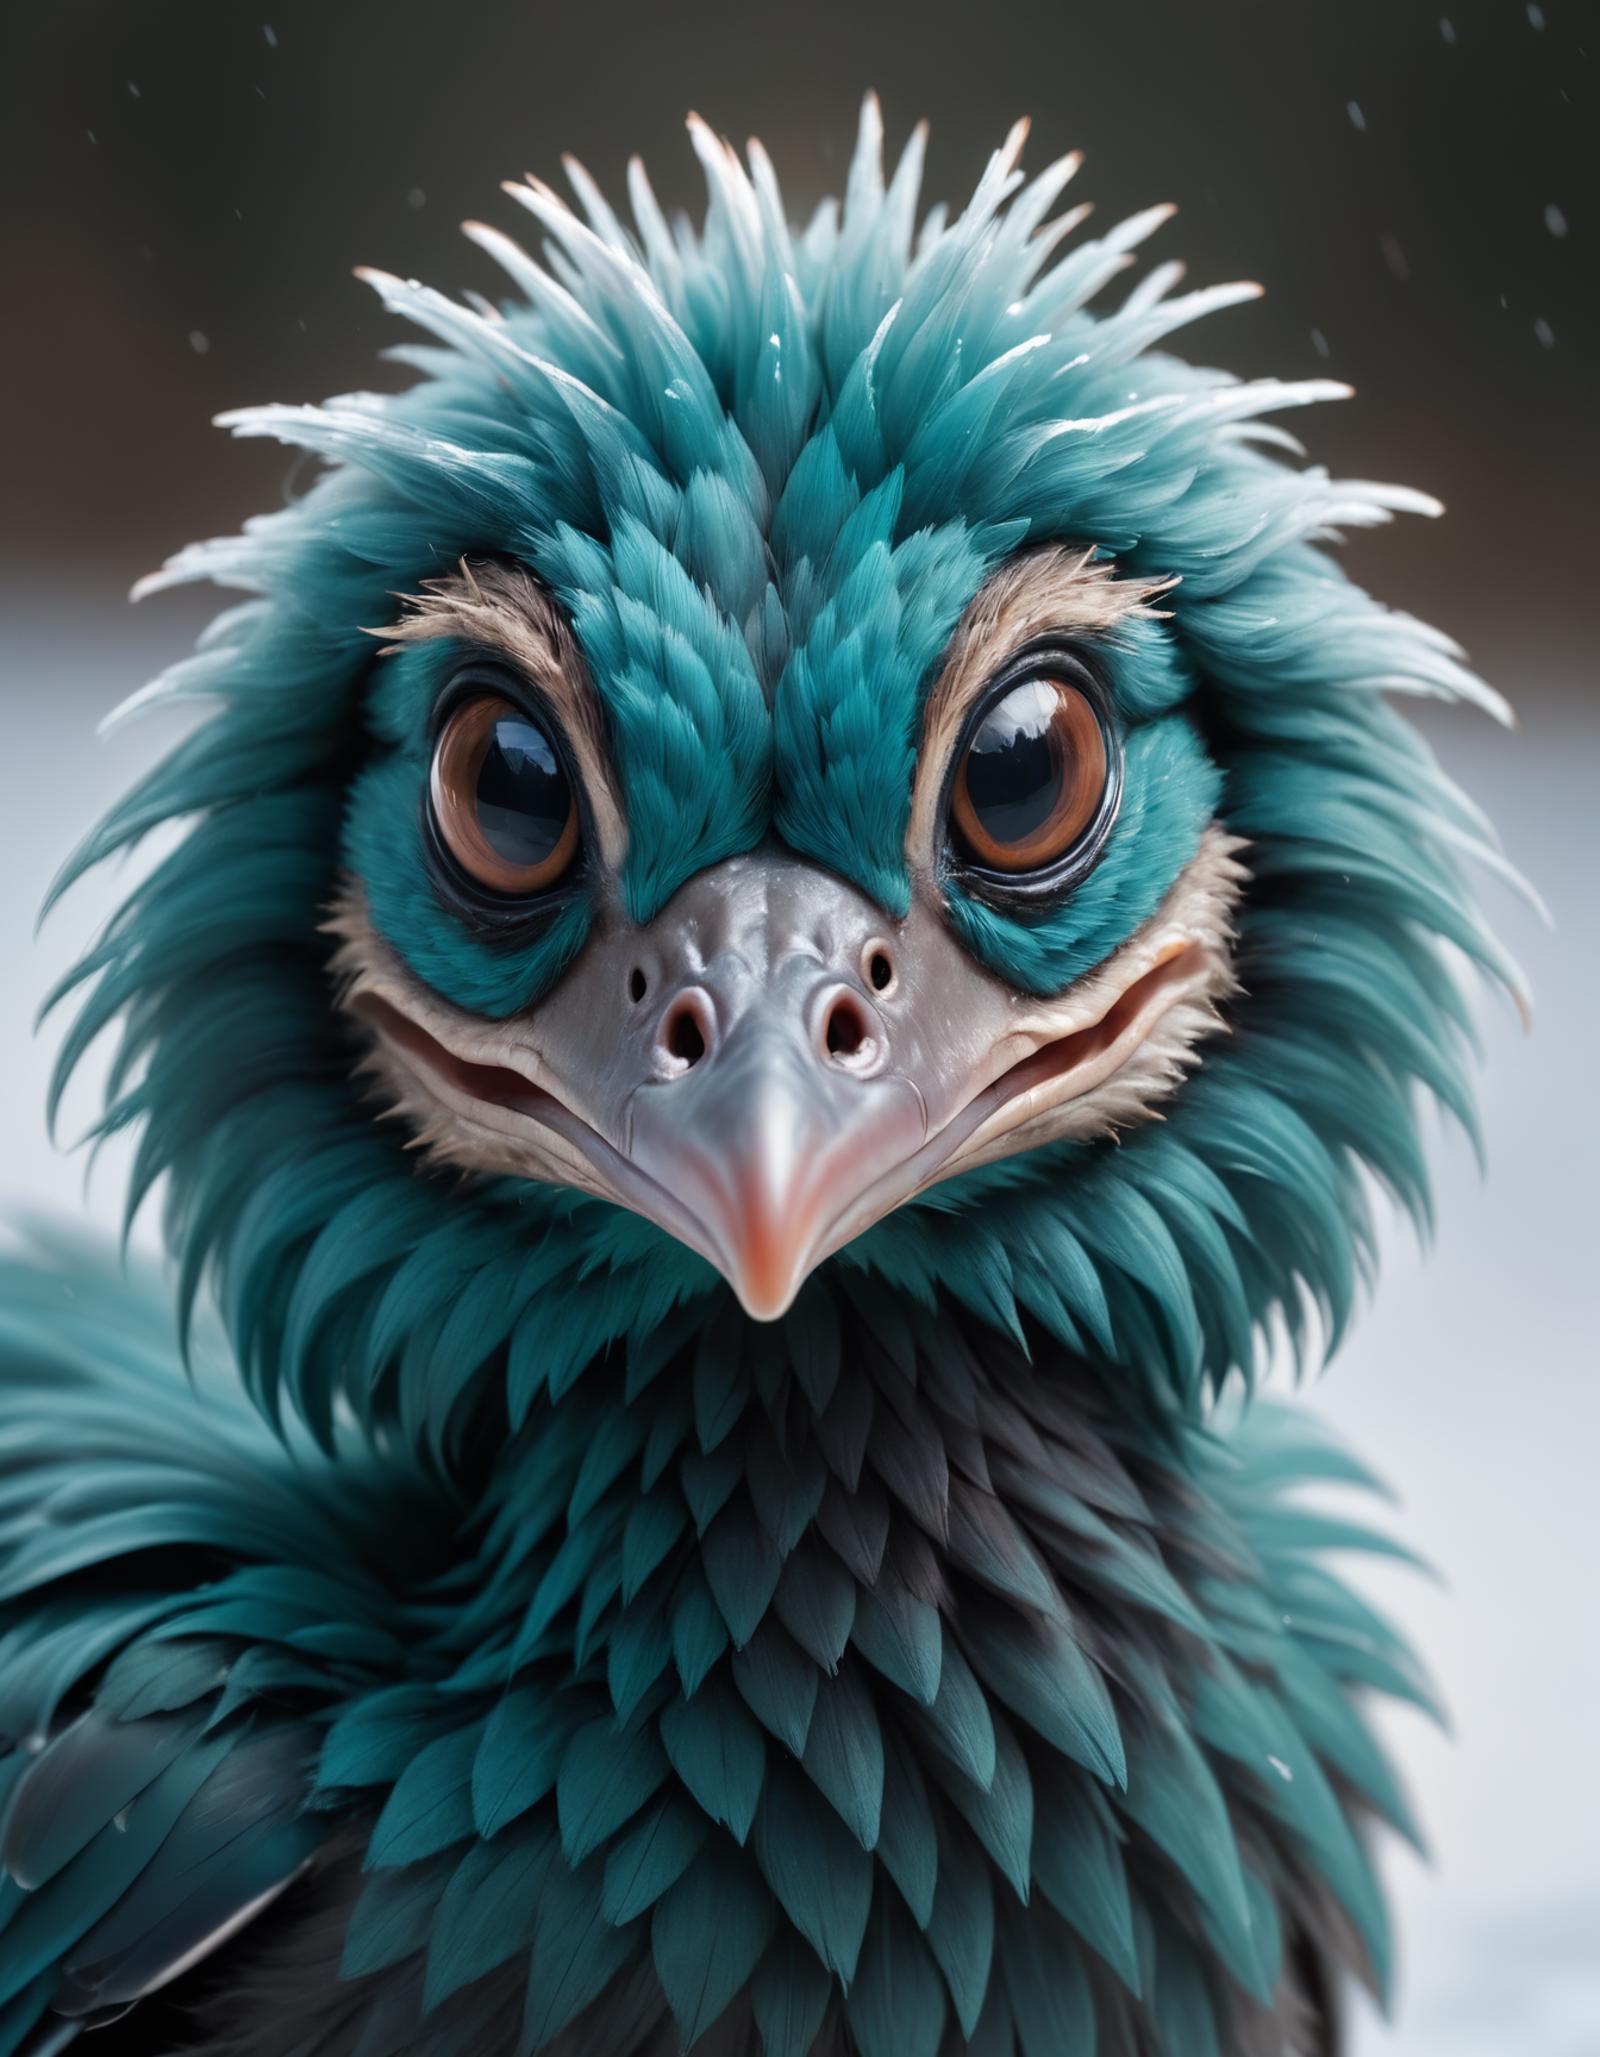 The head of a blue bird with a beak and long hair.